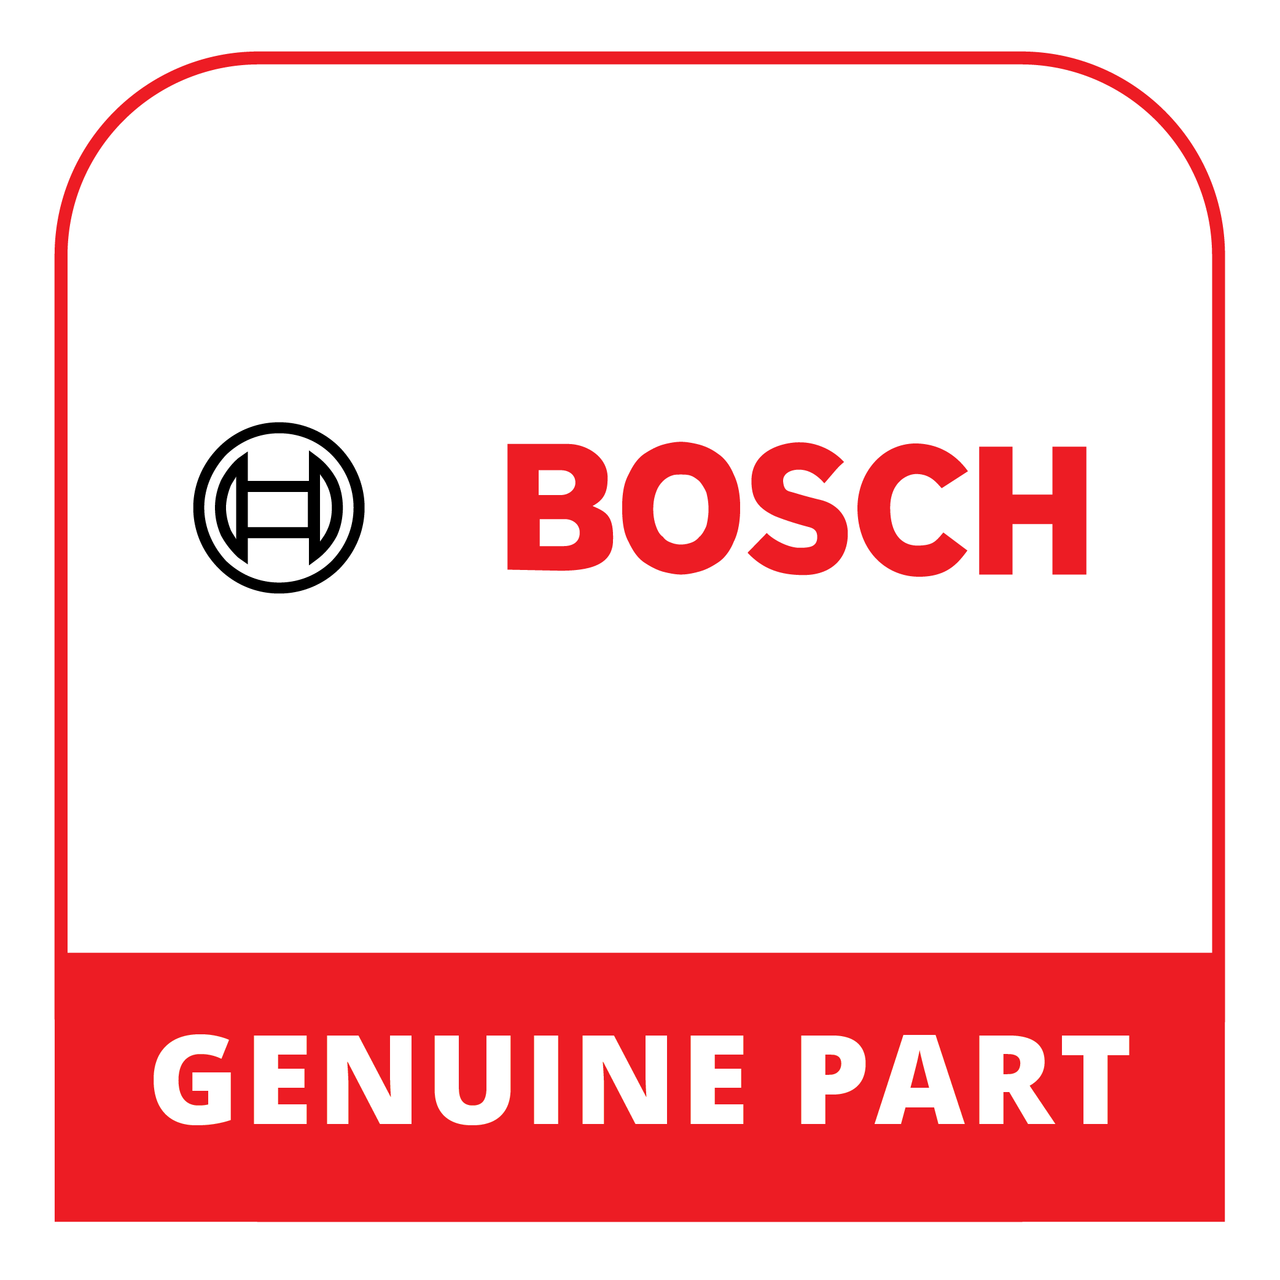 Bosch (Thermador) 20003280 - Lower Crockery Basket - Genuine Bosch (Thermador) Part